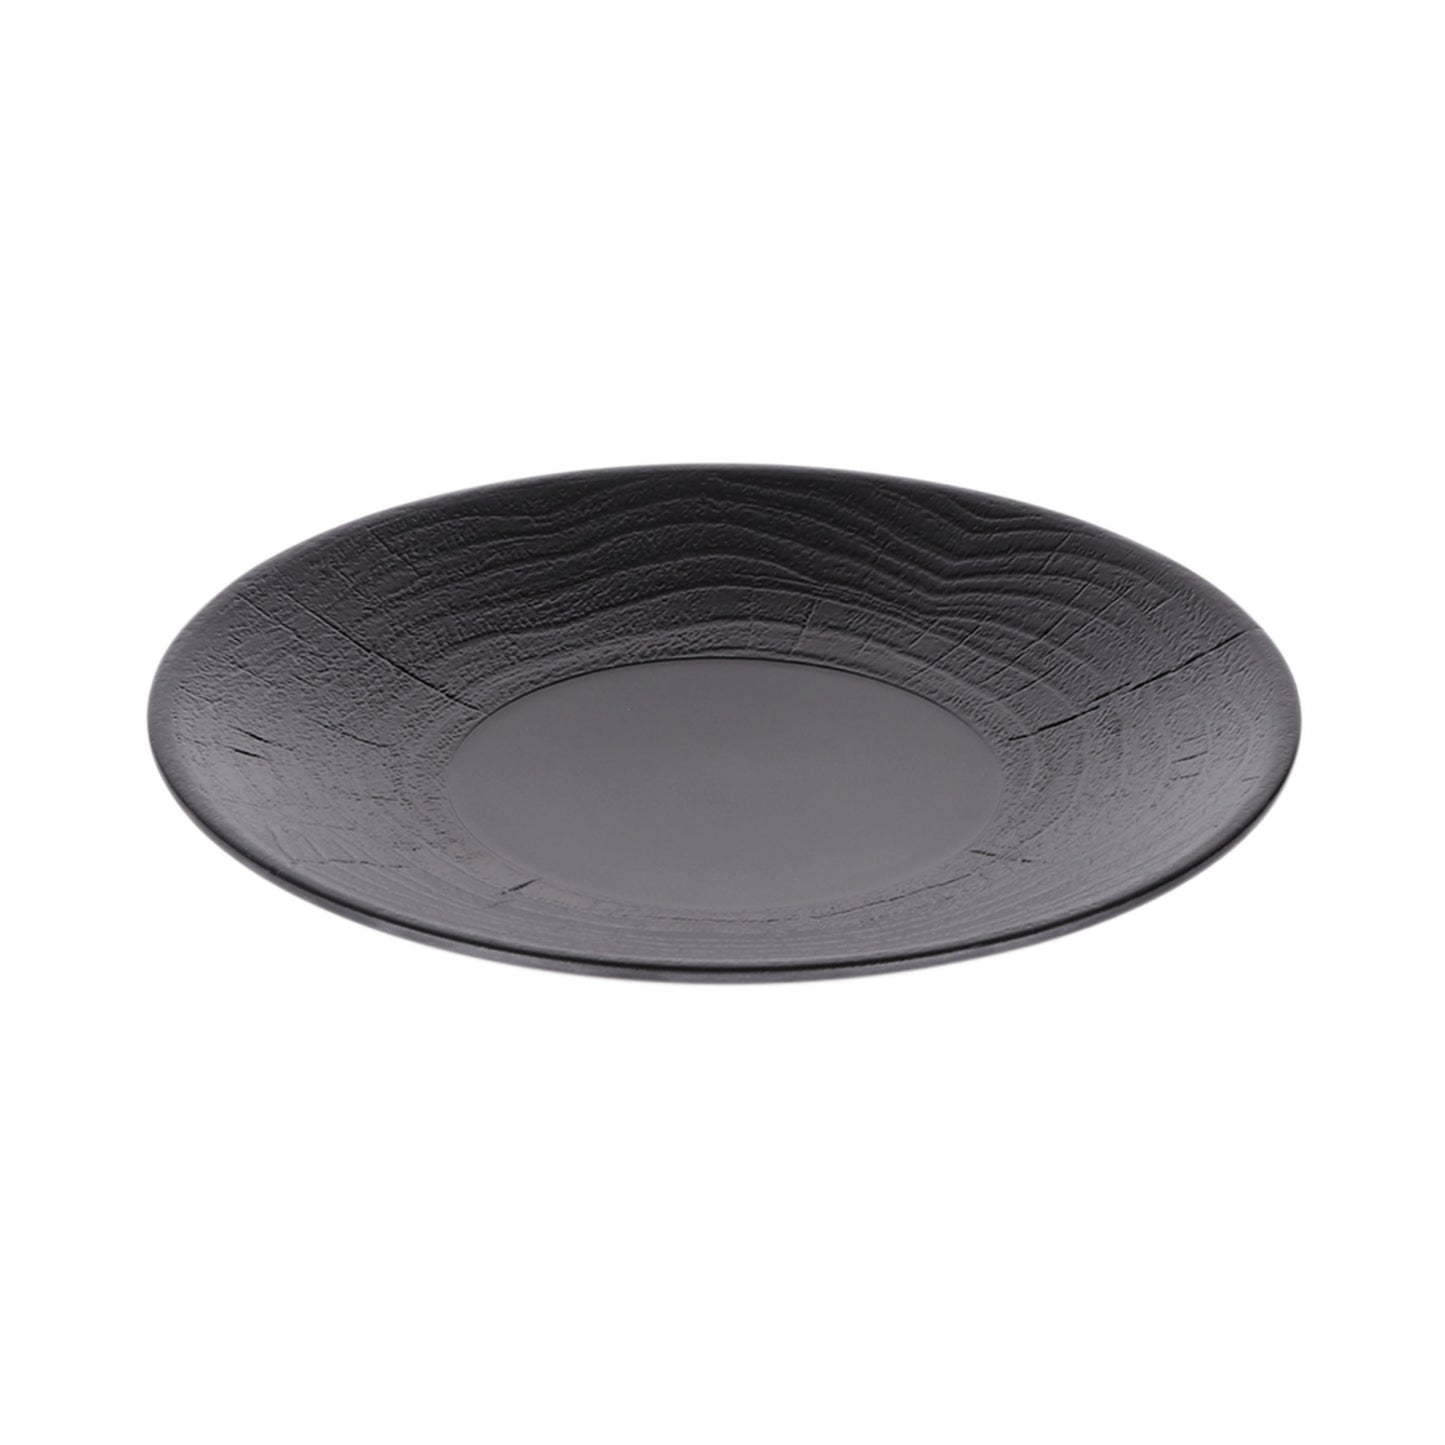 Melamine Round Plate - Black